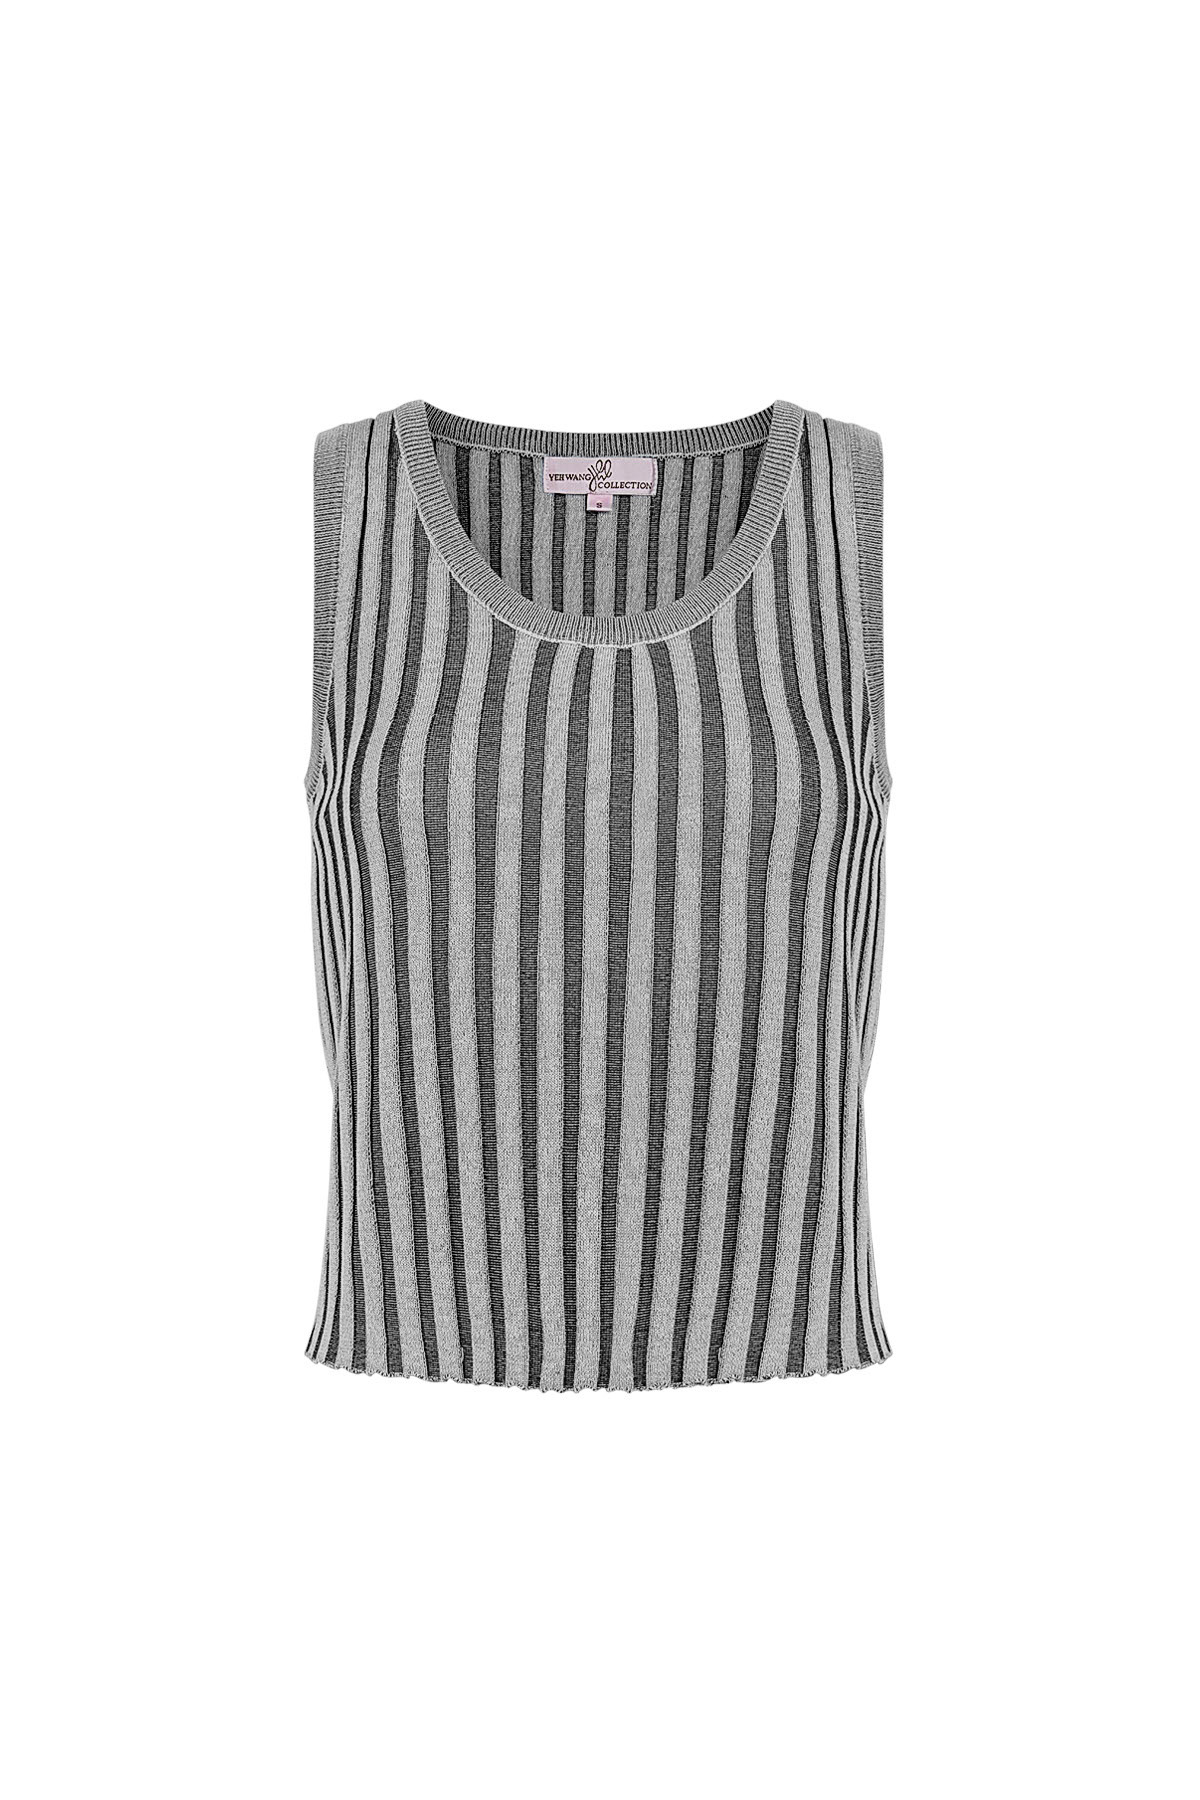 Sleeveless, striped top medium – gray h5 